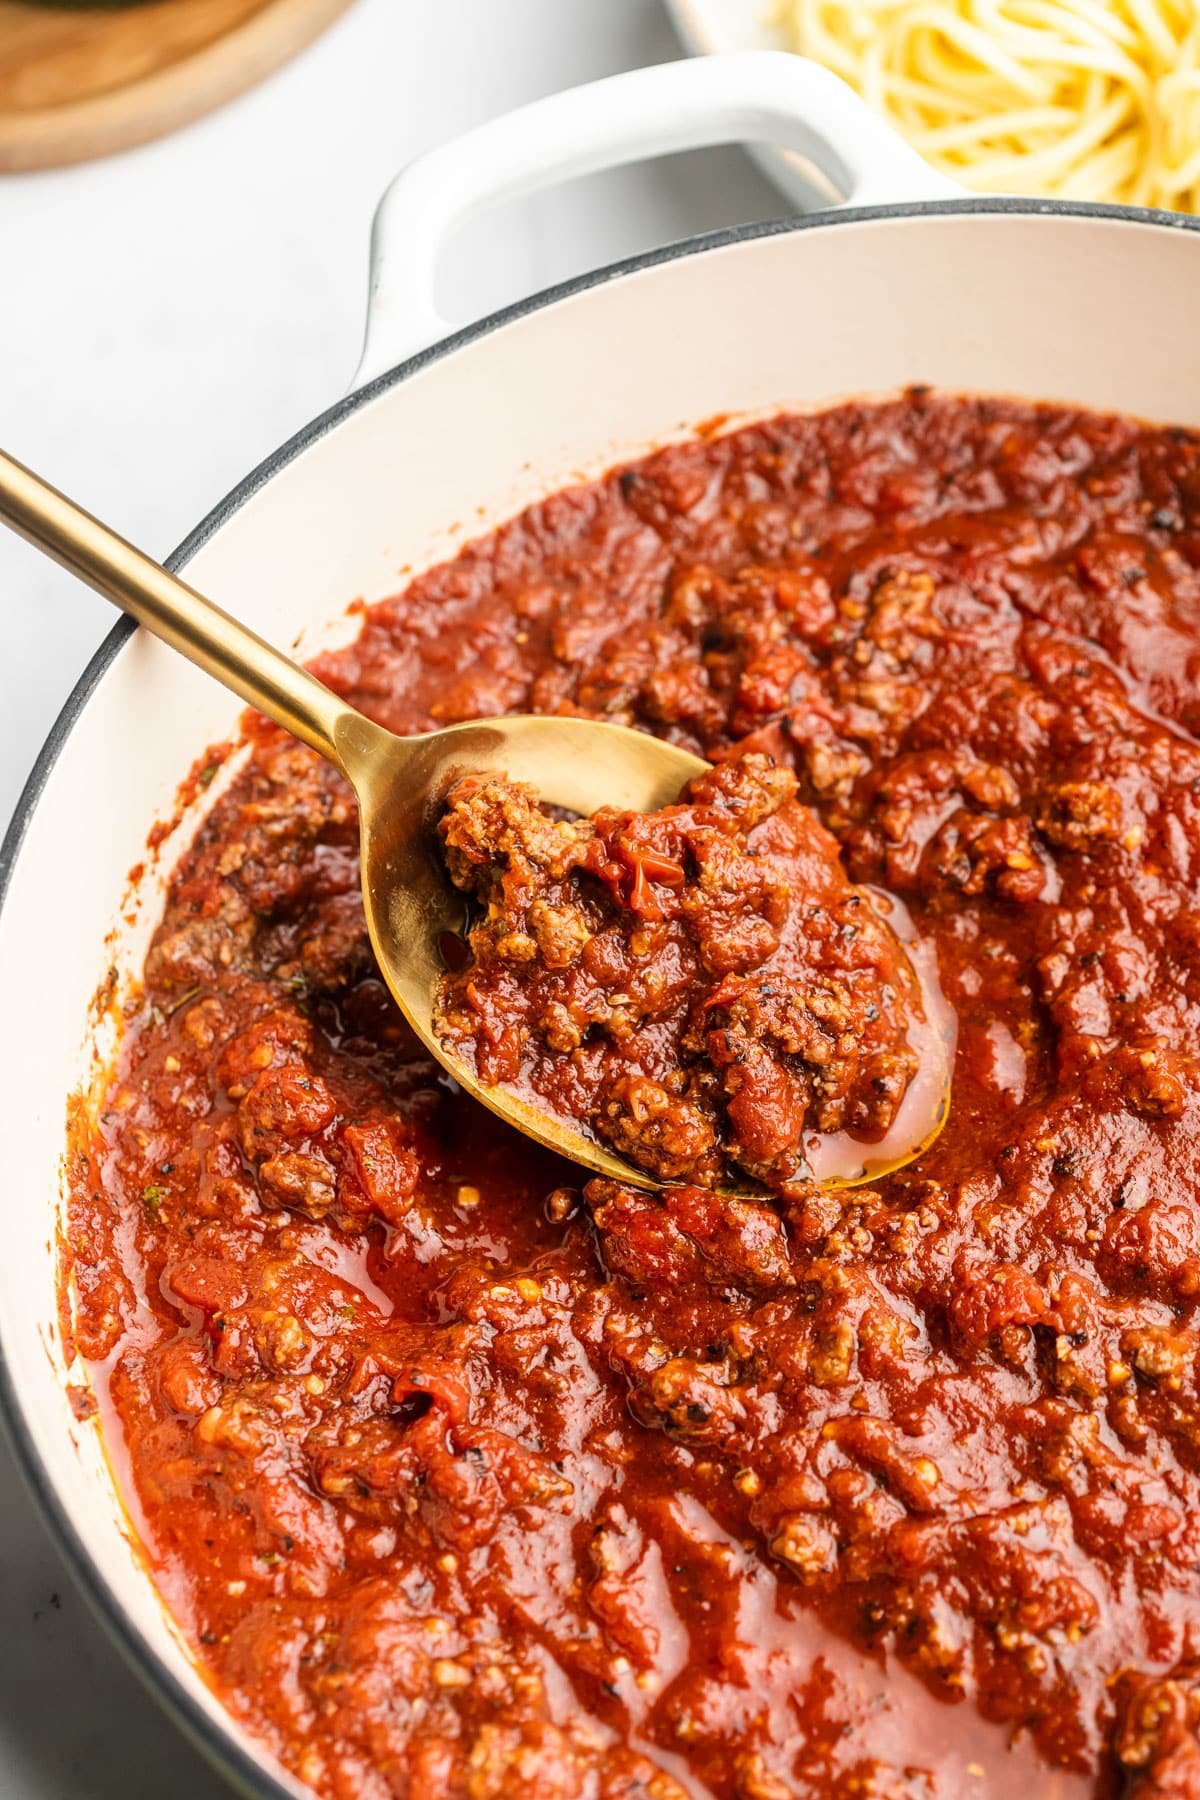 DIY Spaghetti Sauce Seasoning Mix